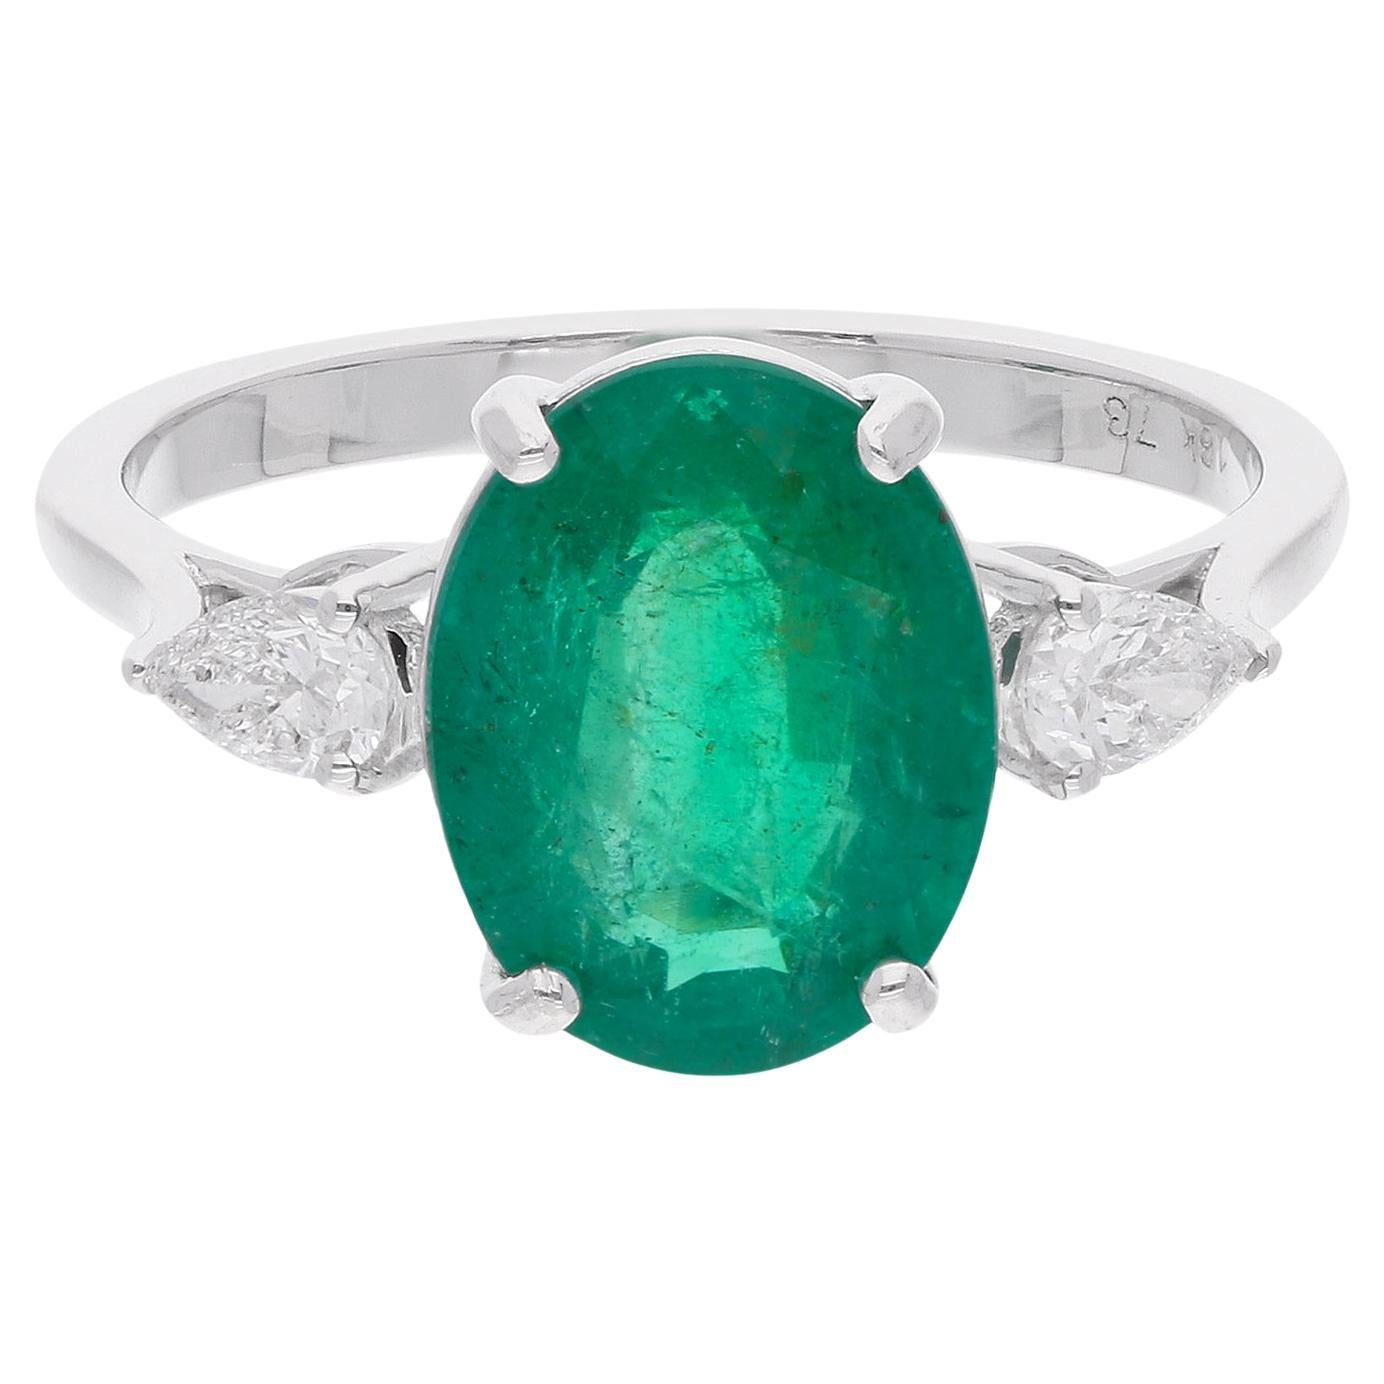 Oval Zambian Emerald Gemstone Cocktail Ring Diamond 18 Karat White Gold Jewelry For Sale